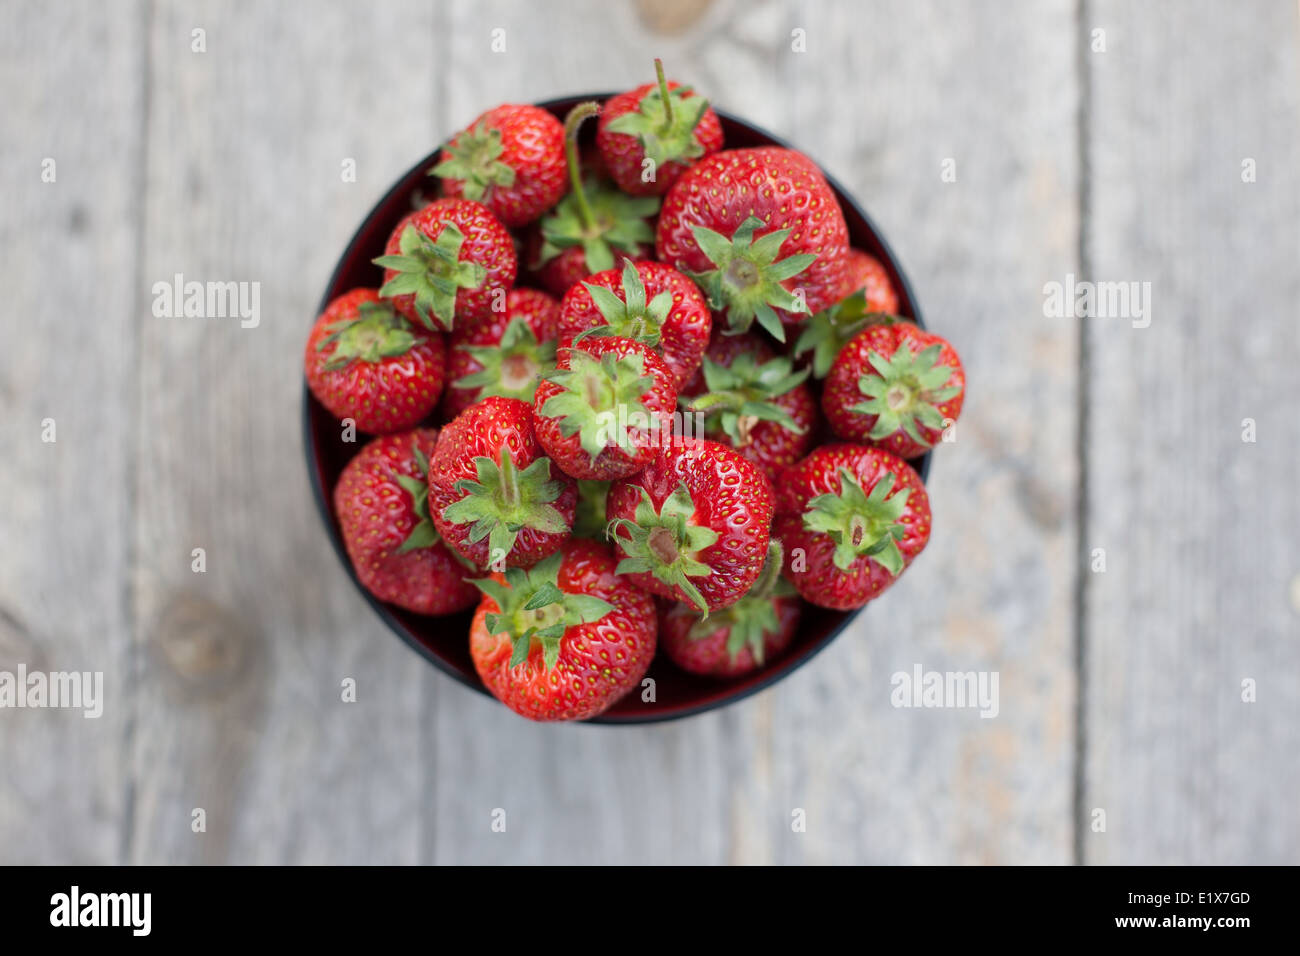 Erdbeeren polieren -Fotos und -Bildmaterial in hoher Auflösung – Alamy